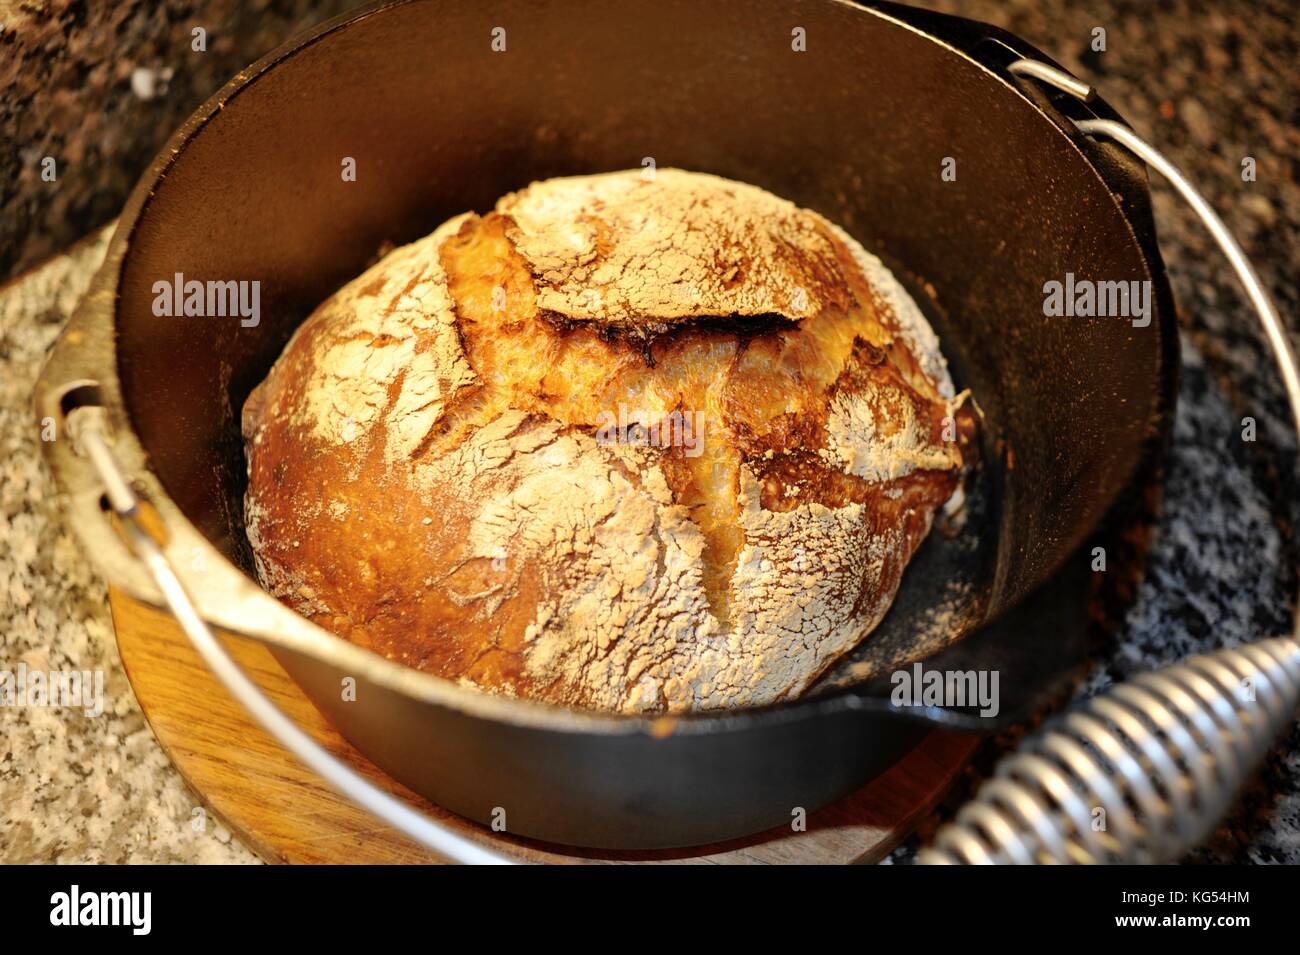 https://c8.alamy.com/comp/KG54HM/fresh-crusty-loaf-of-artisanal-homemade-bread-baked-in-a-lodge-dutch-KG54HM.jpg